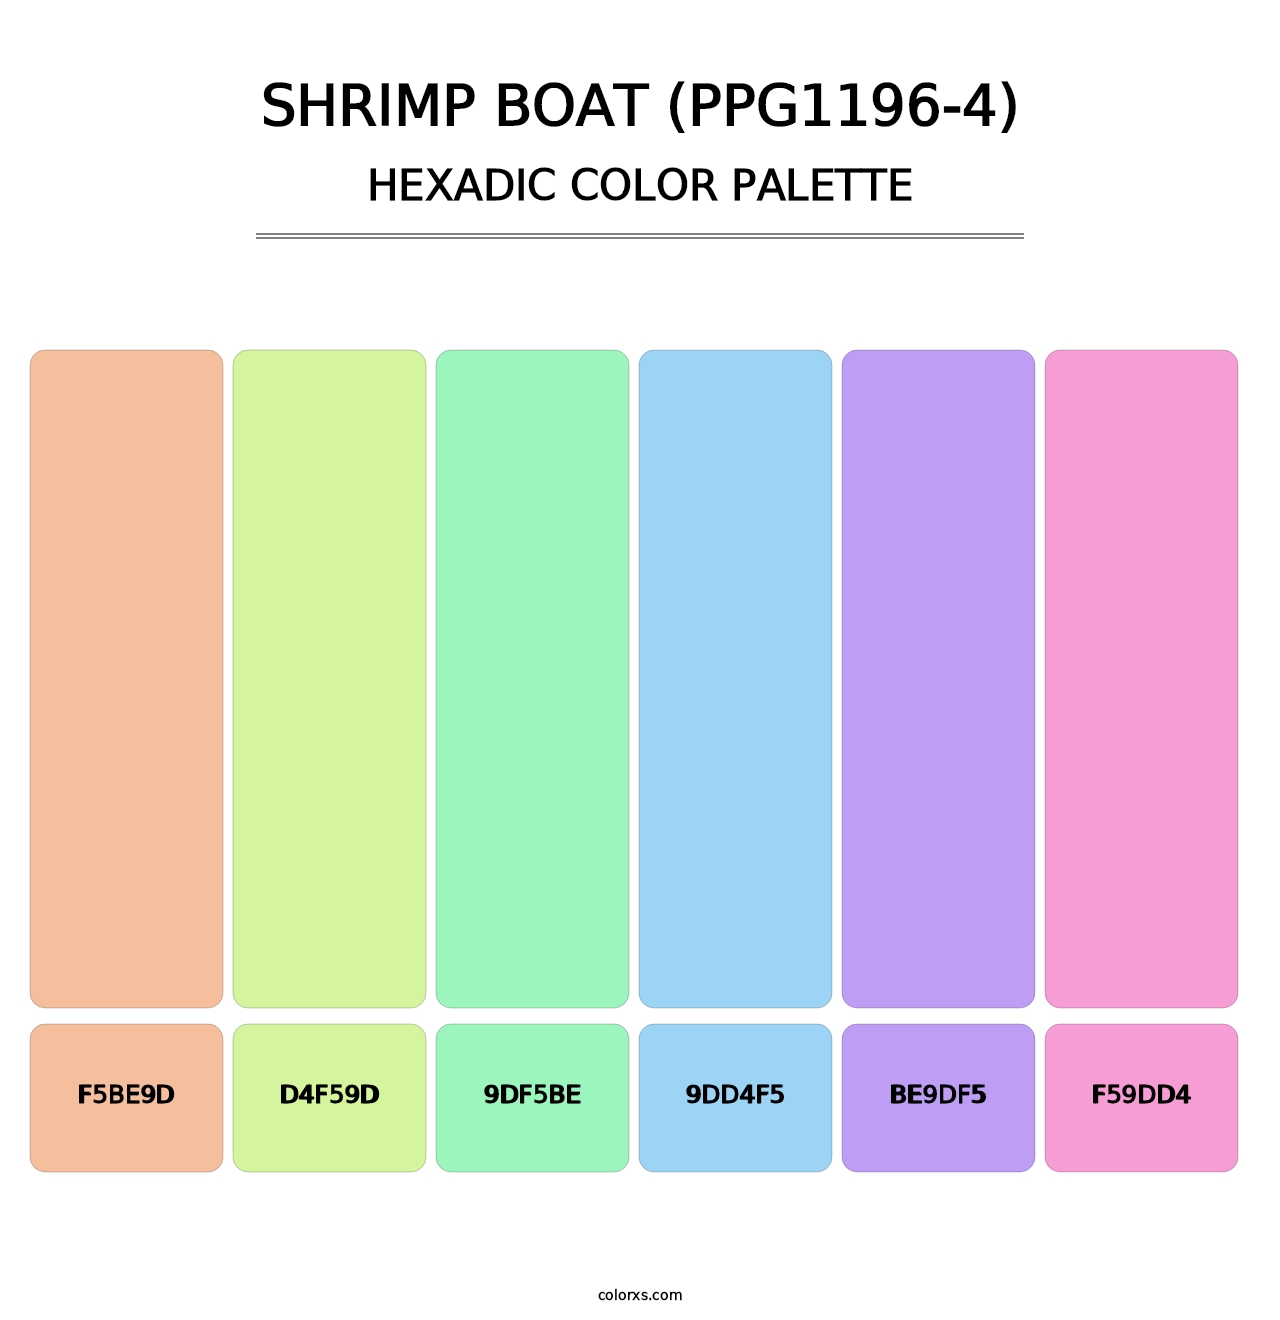 Shrimp Boat (PPG1196-4) - Hexadic Color Palette